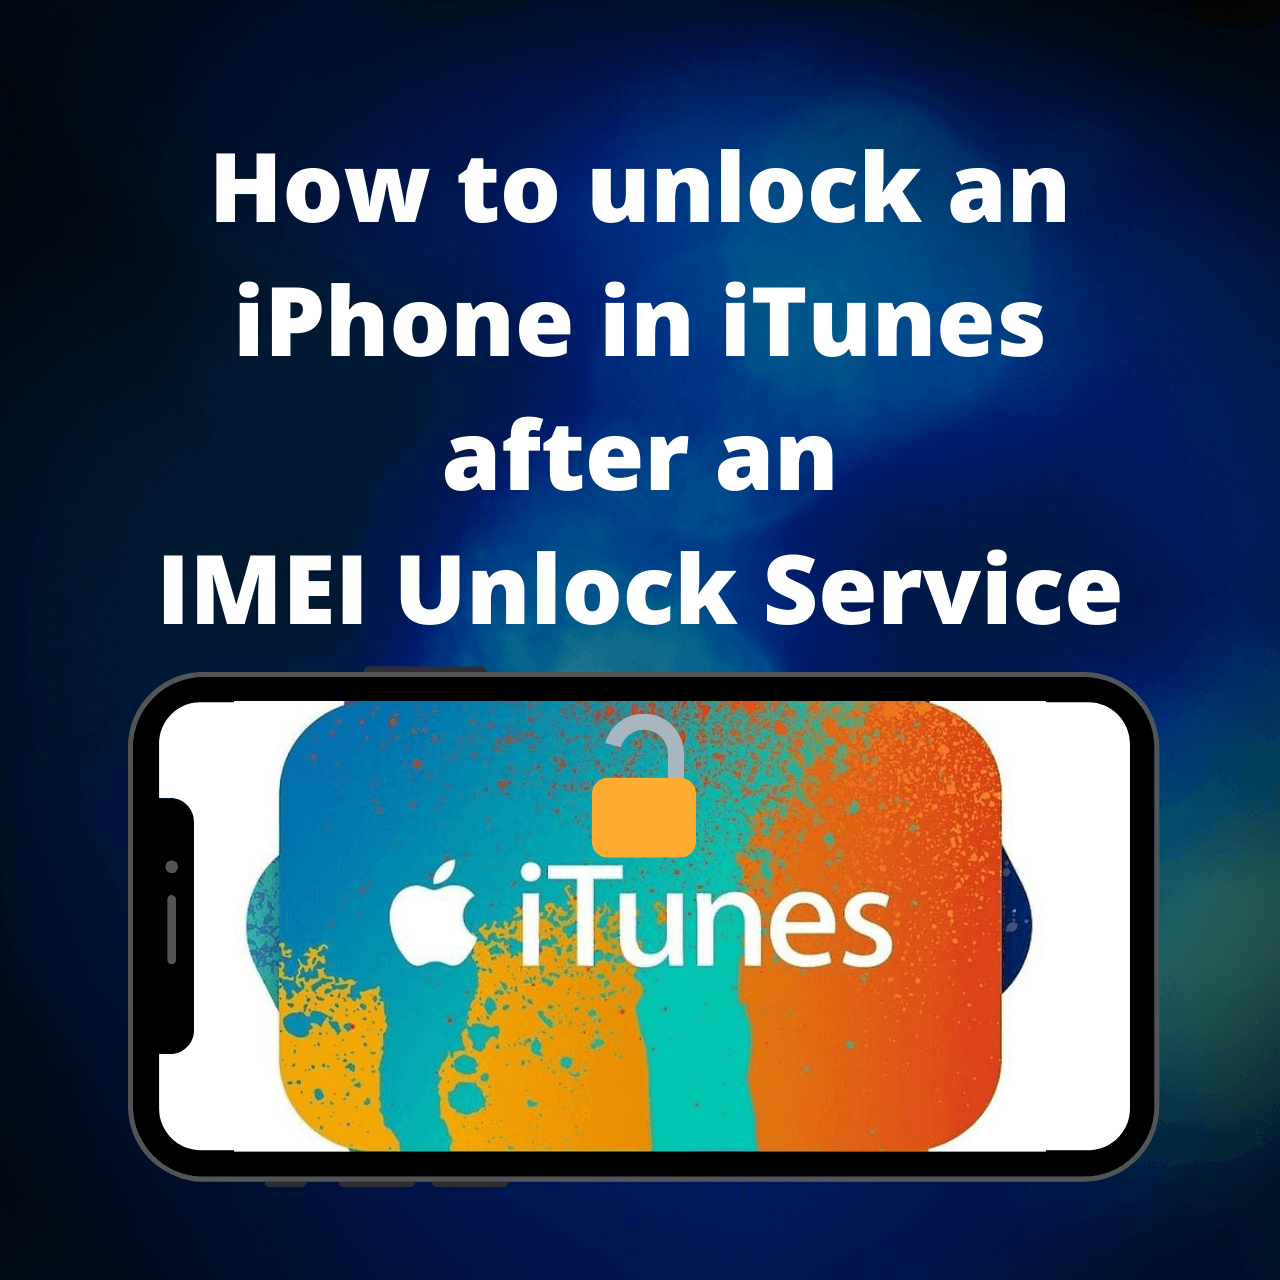 iphone unlock toolkit